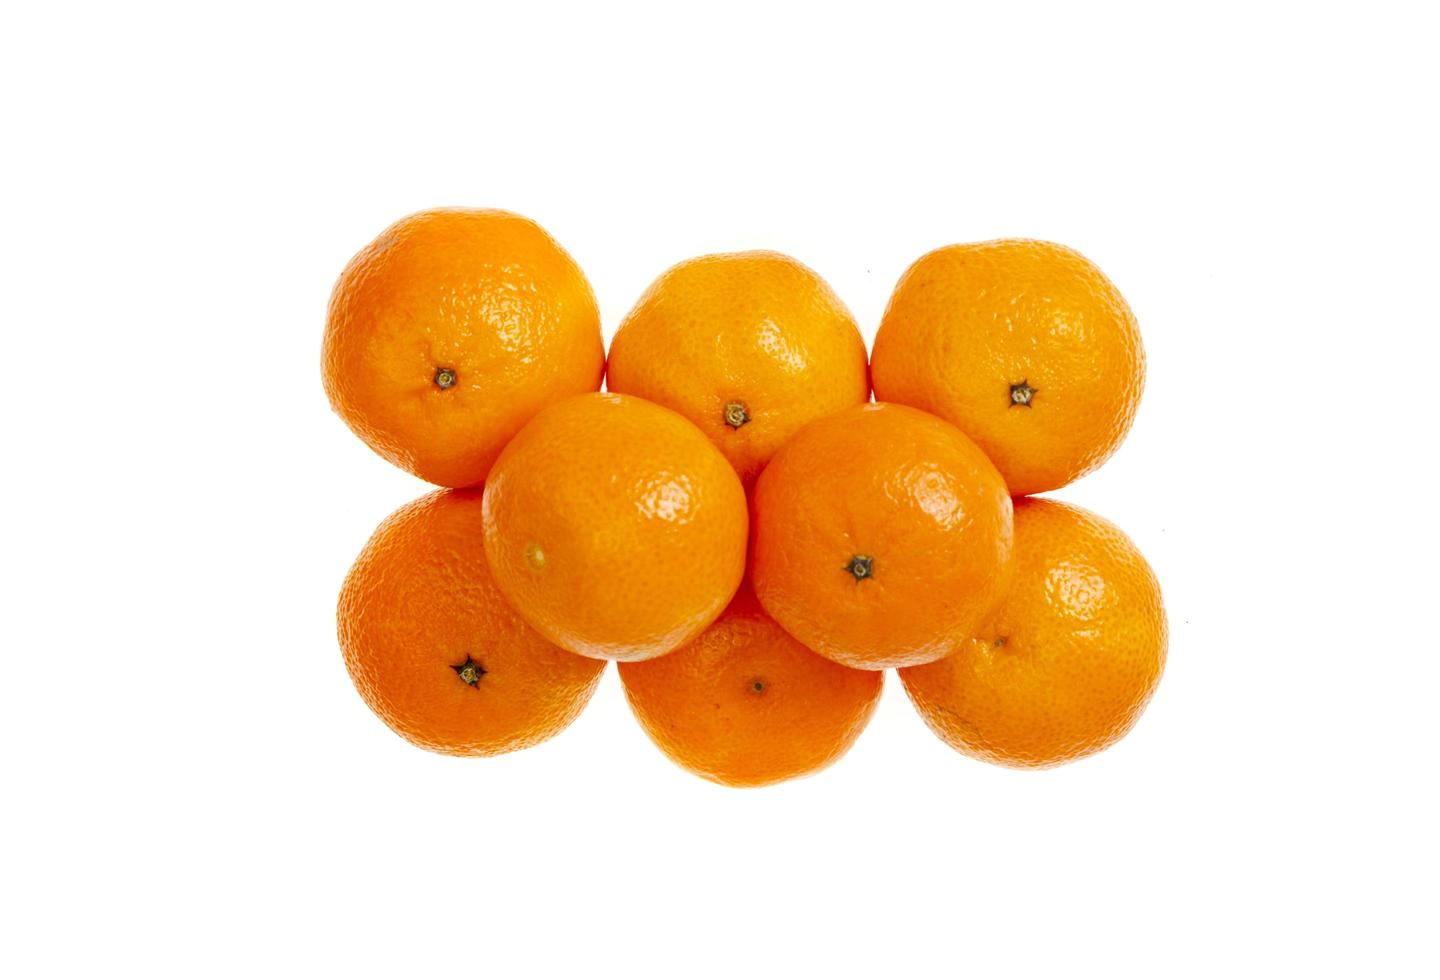 Montón de clementinas naranjas maduras aisladas sobre fondo blanco. foto de estudio